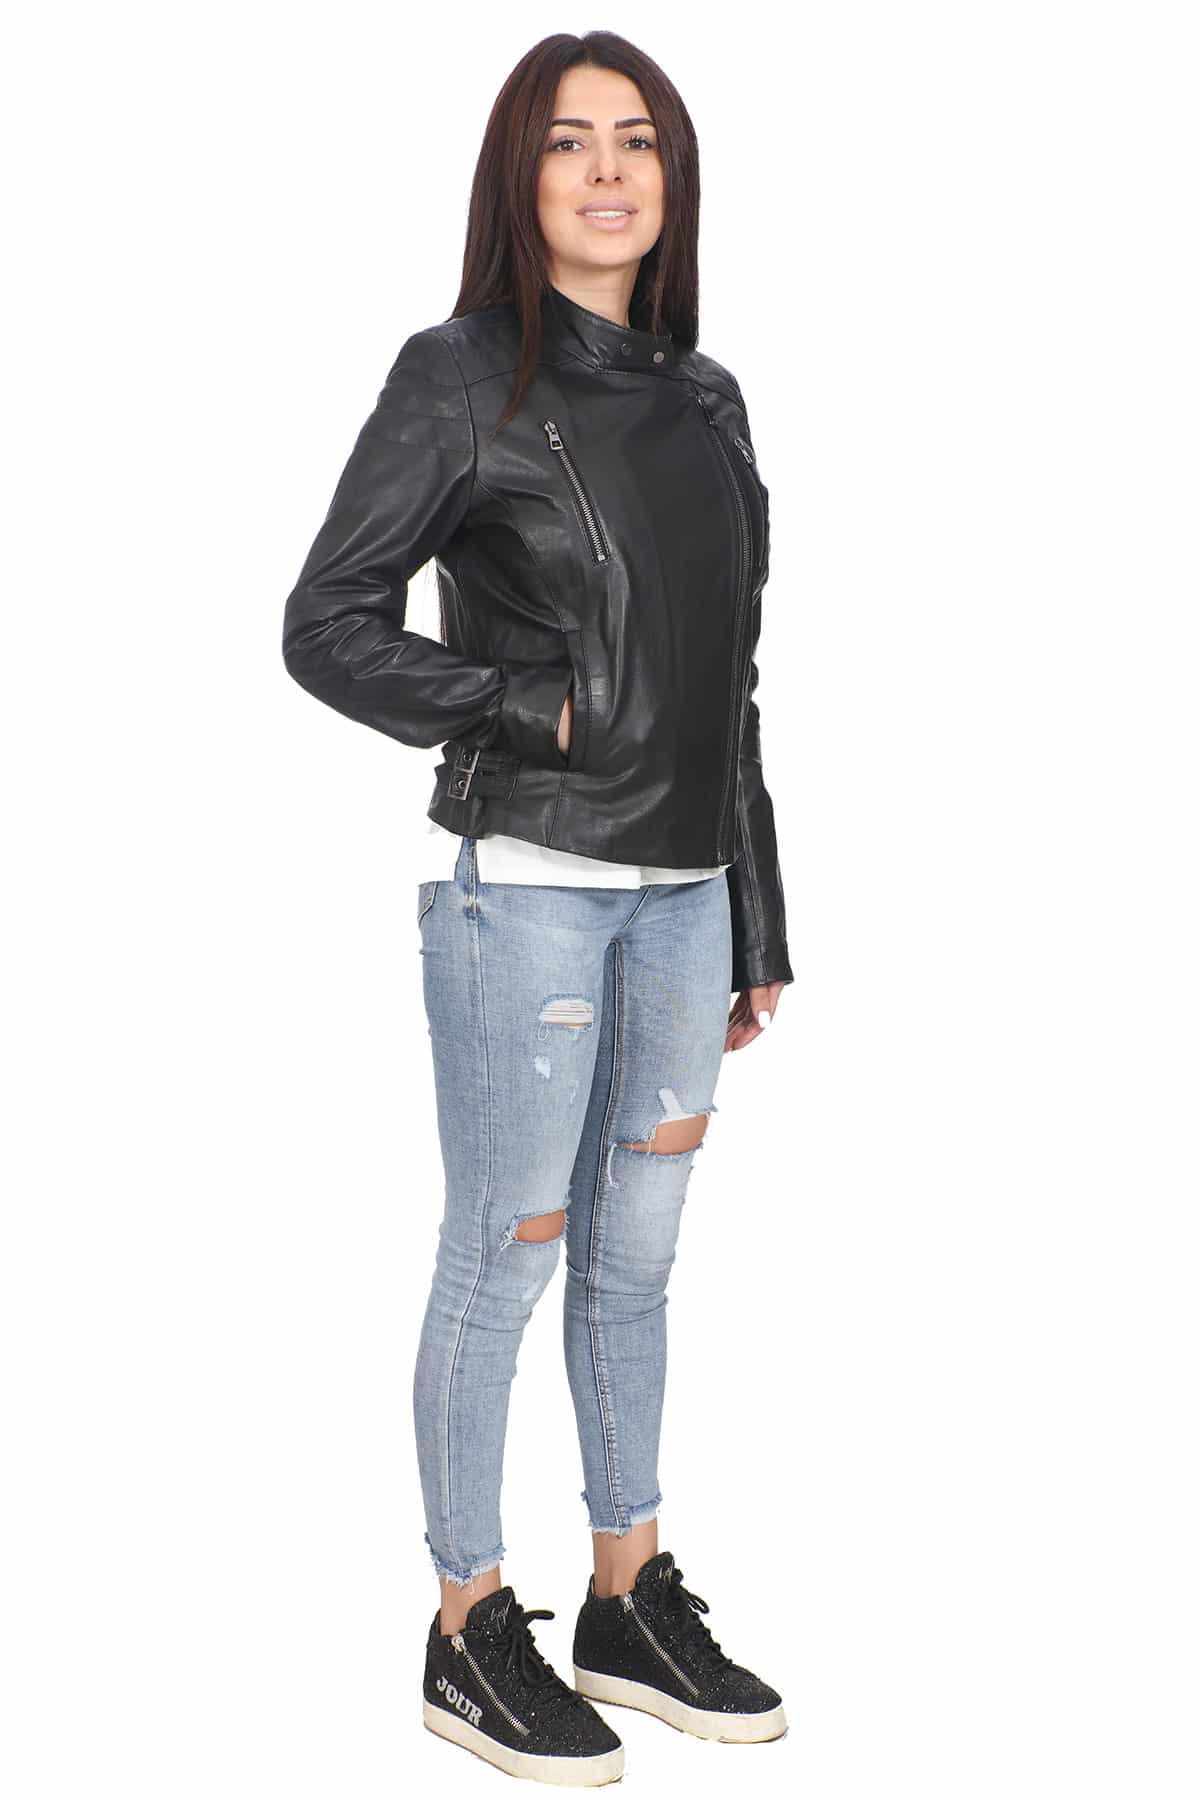 Sia Women's 100 % Real Black Leather Biker Style Jacket